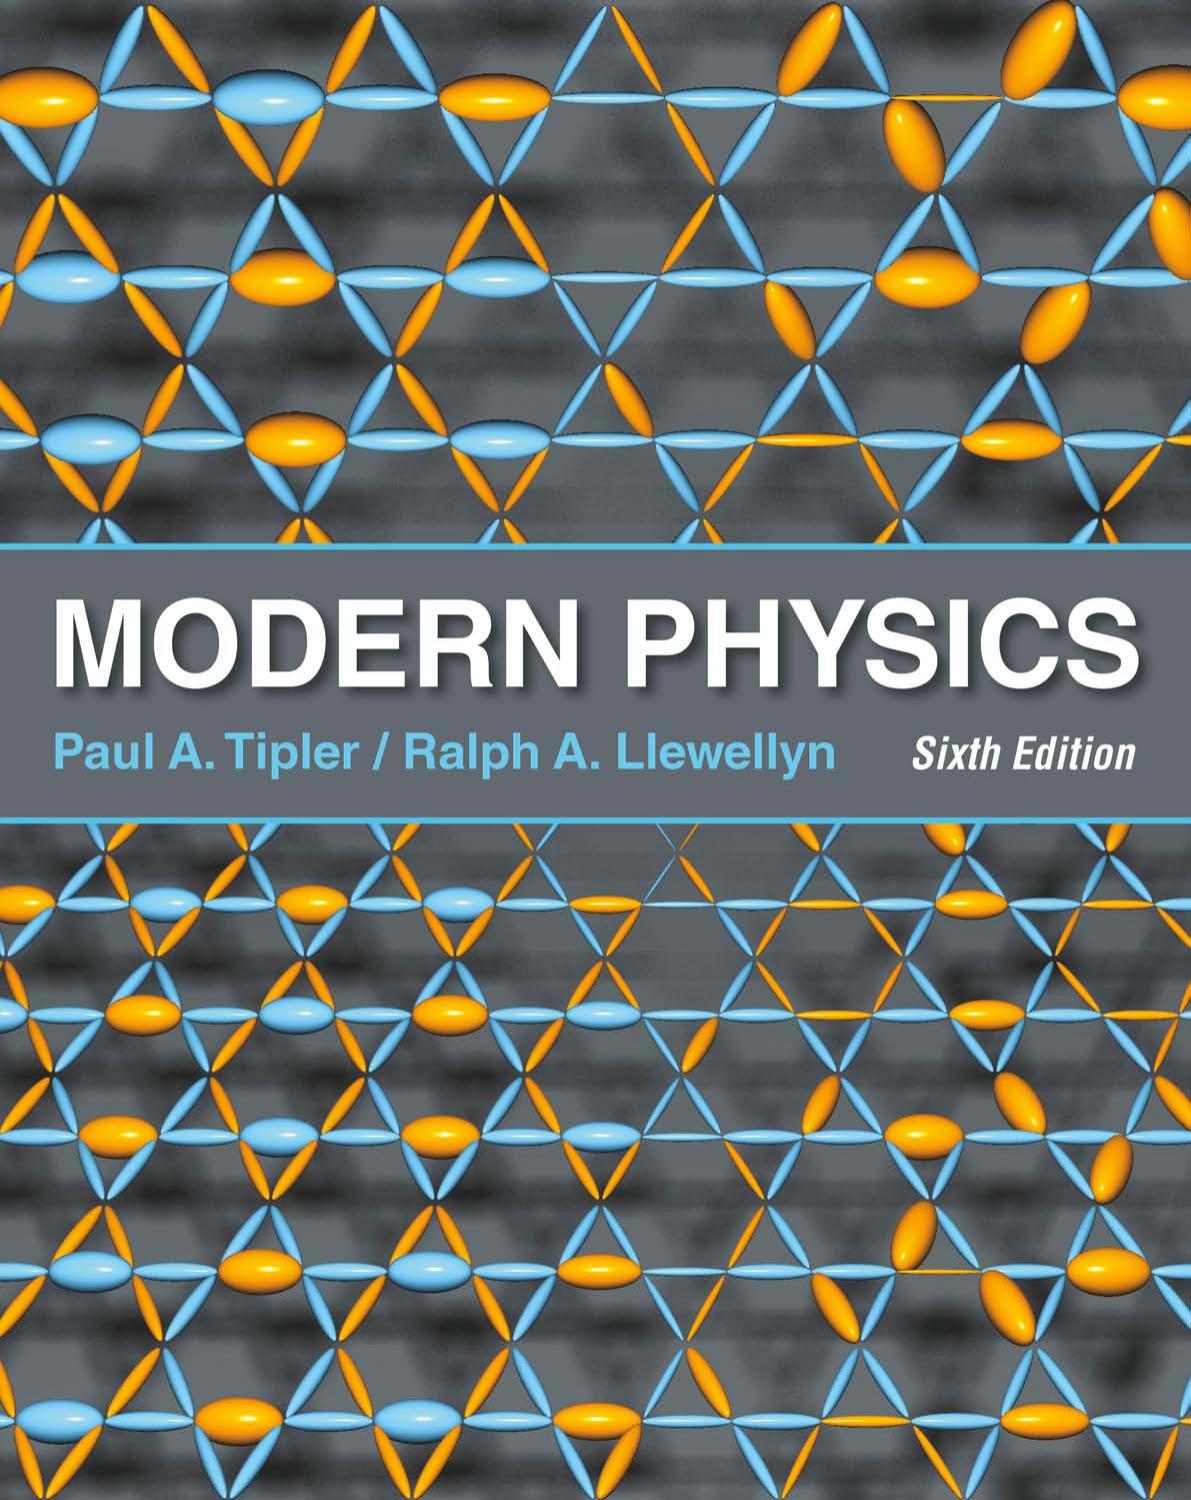 Modern Physics 6th Edition ( PDFDrive.com )